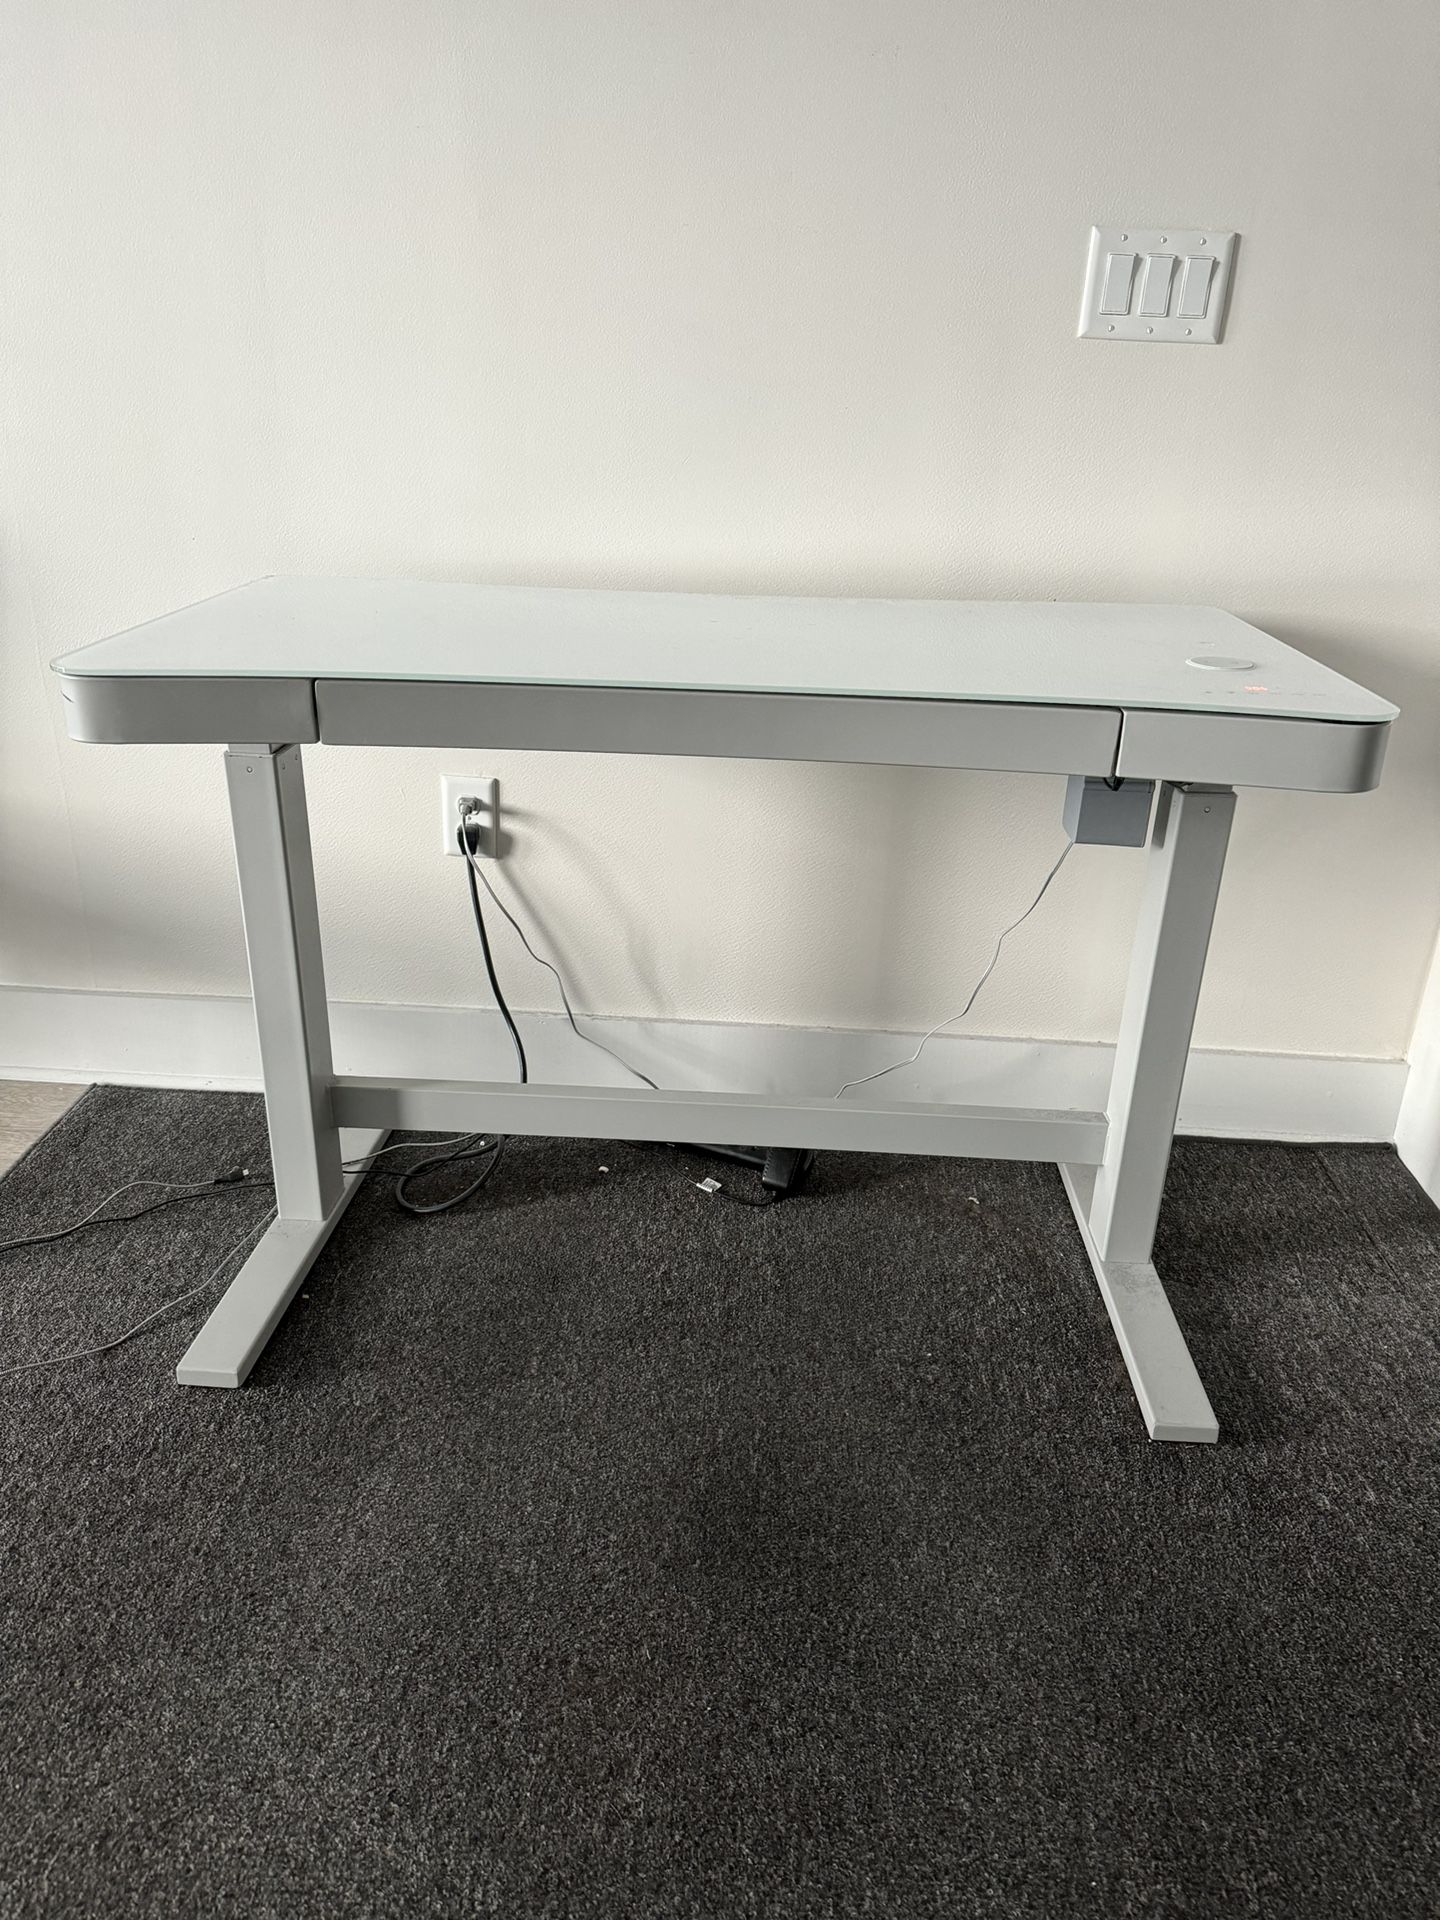 Adjustable Desk in Great Condition